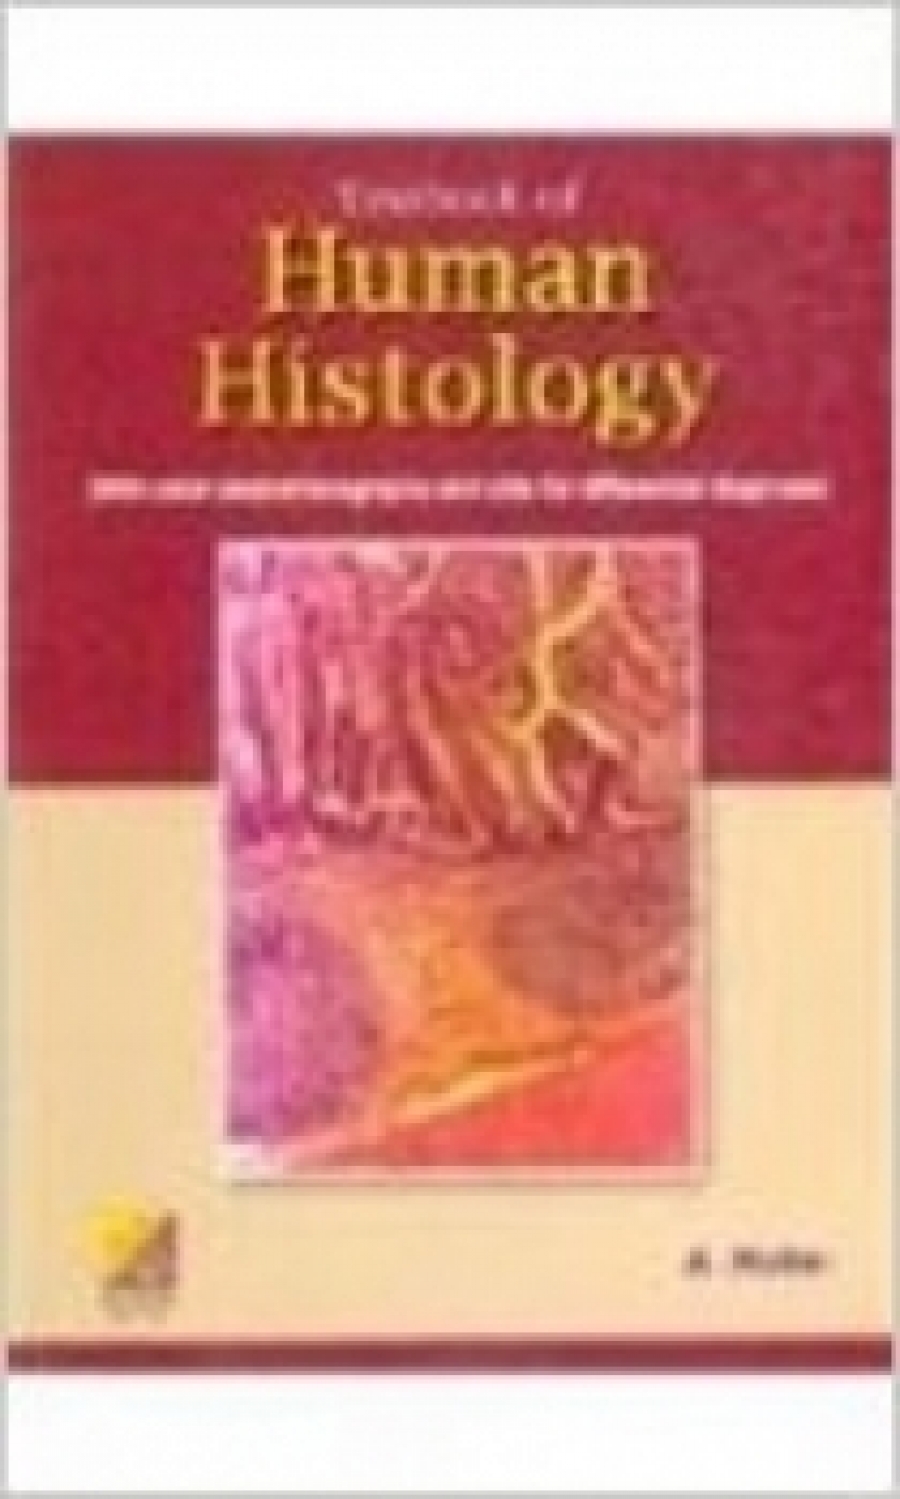 Halim Textbook of Human Histology 